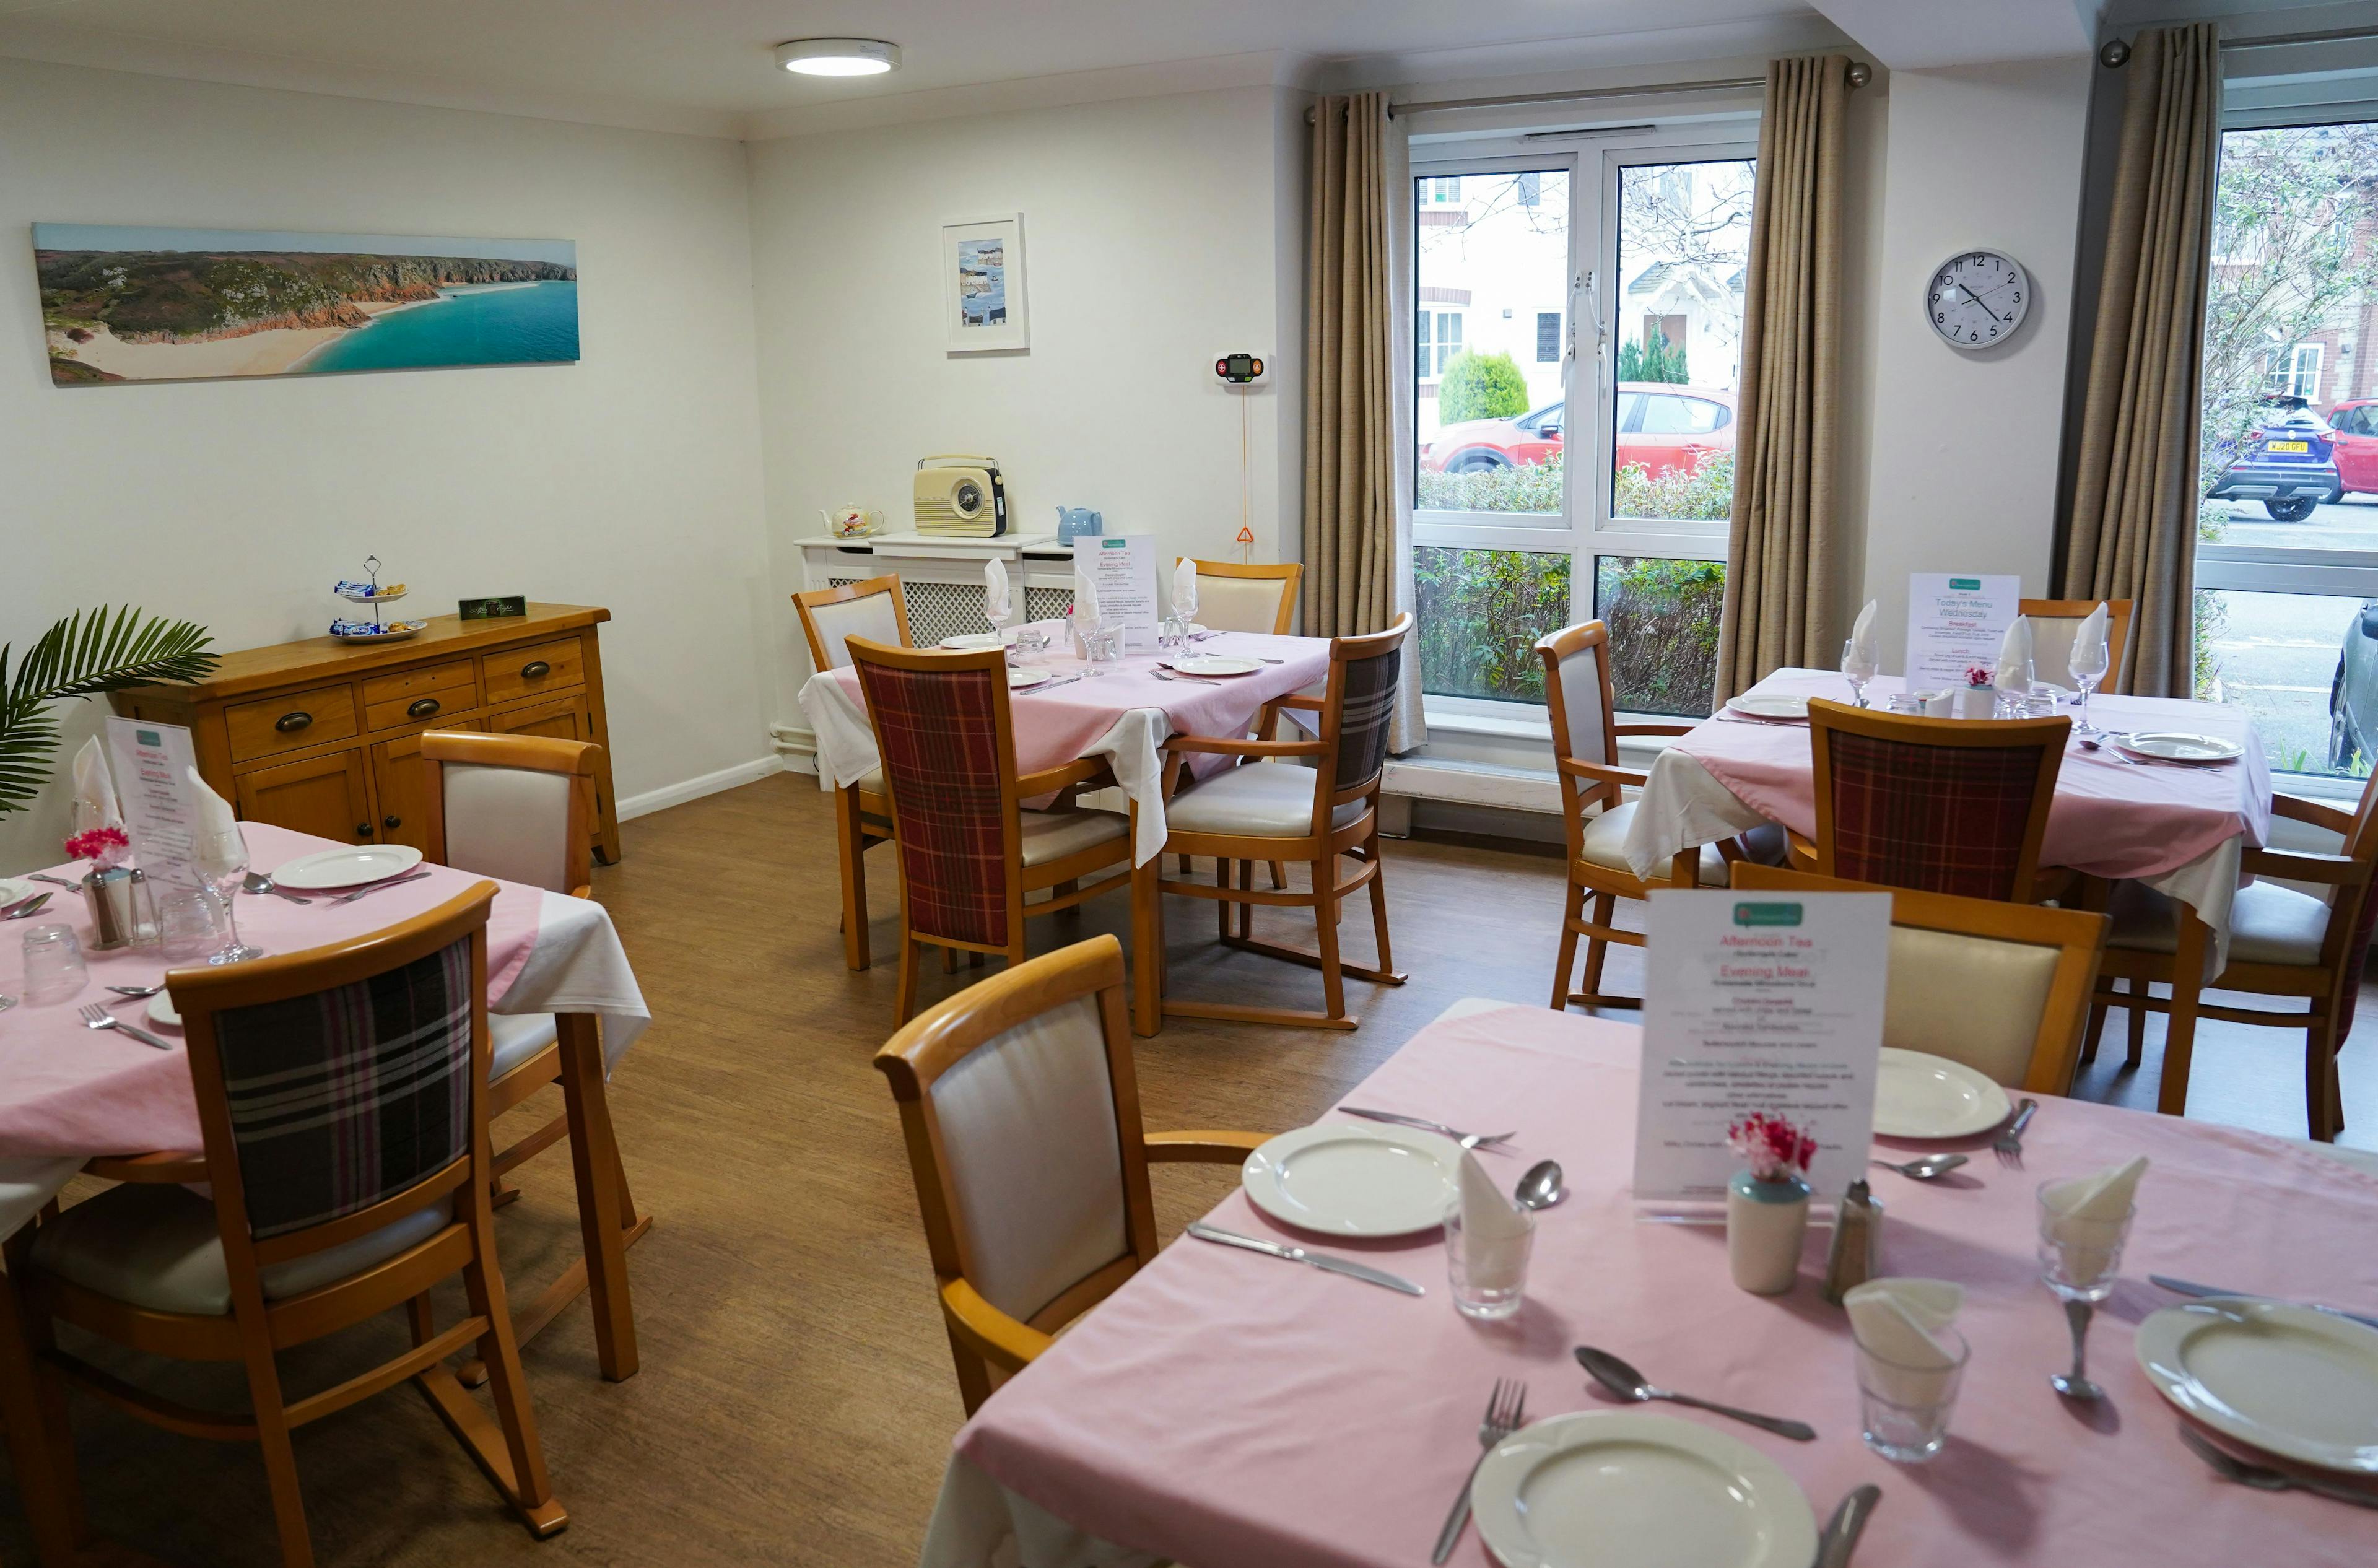 Dining room of Ivydene care home in Ivybridge, Devon